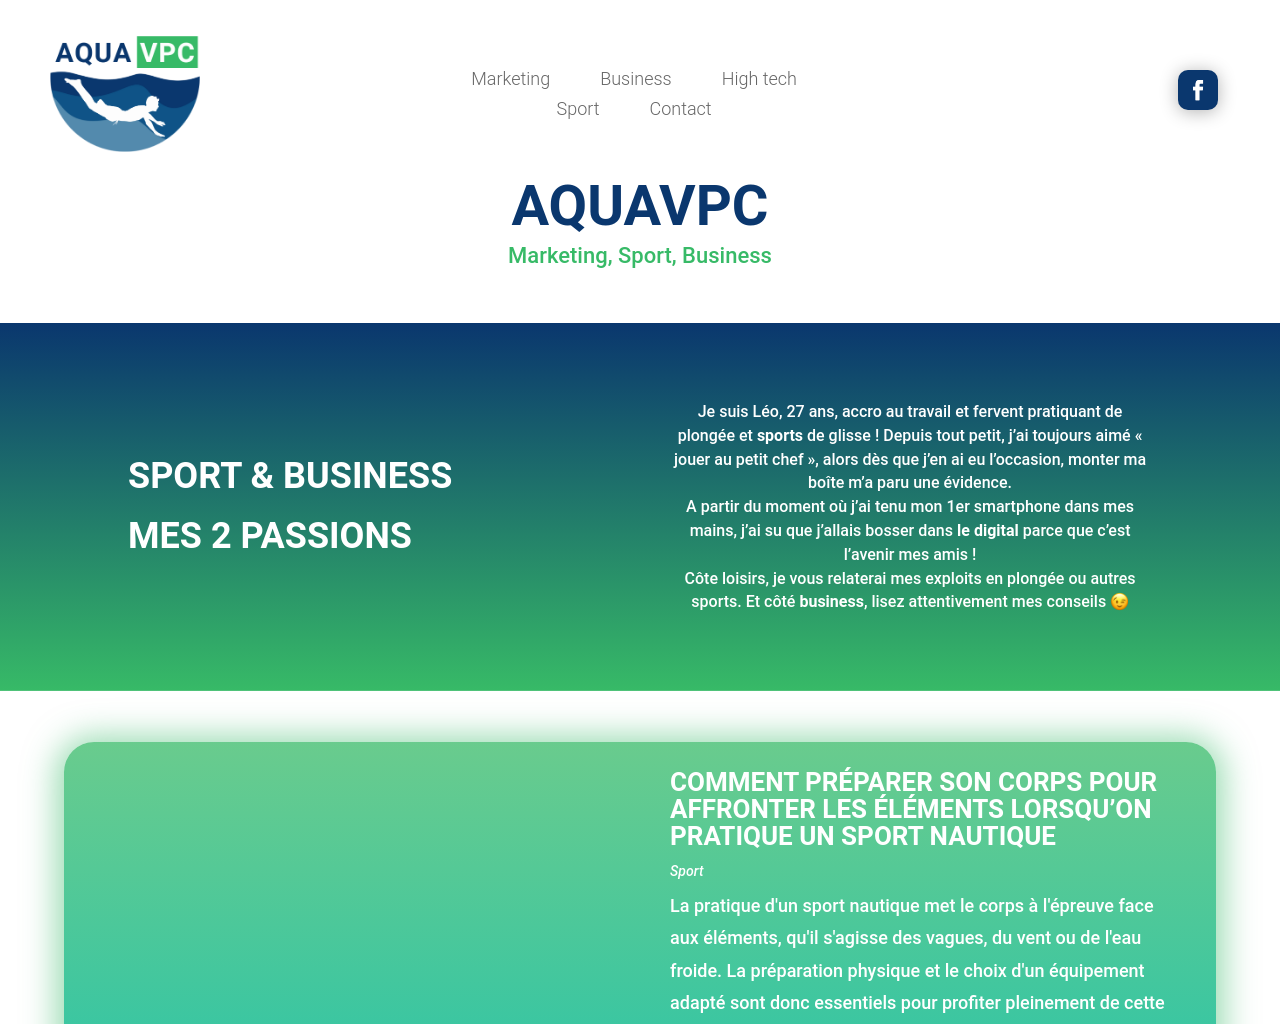 aquavpc.com